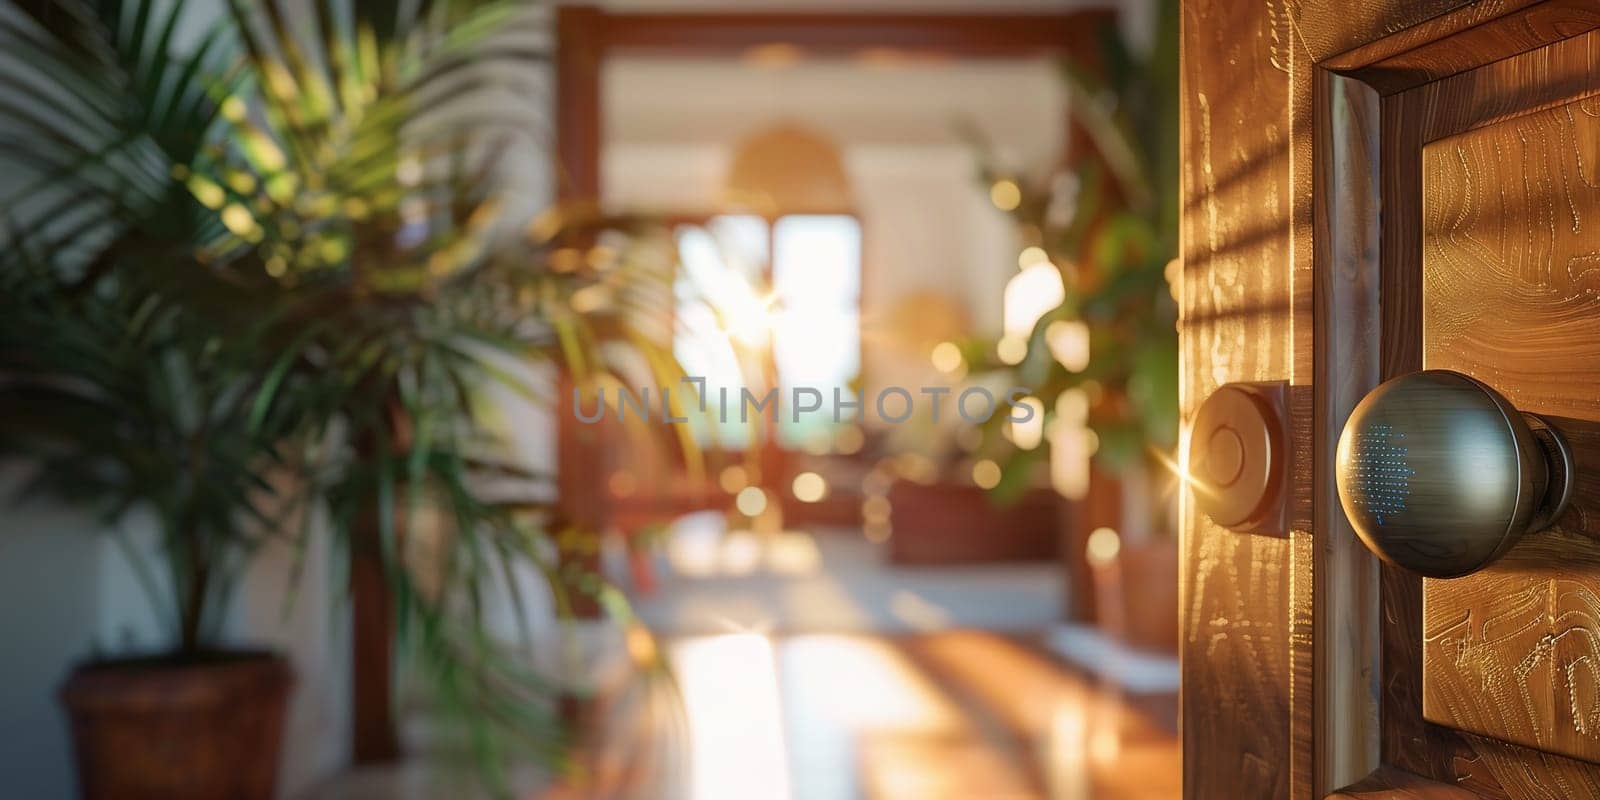 Wooden door with doorknob on blurred background. High quality photo